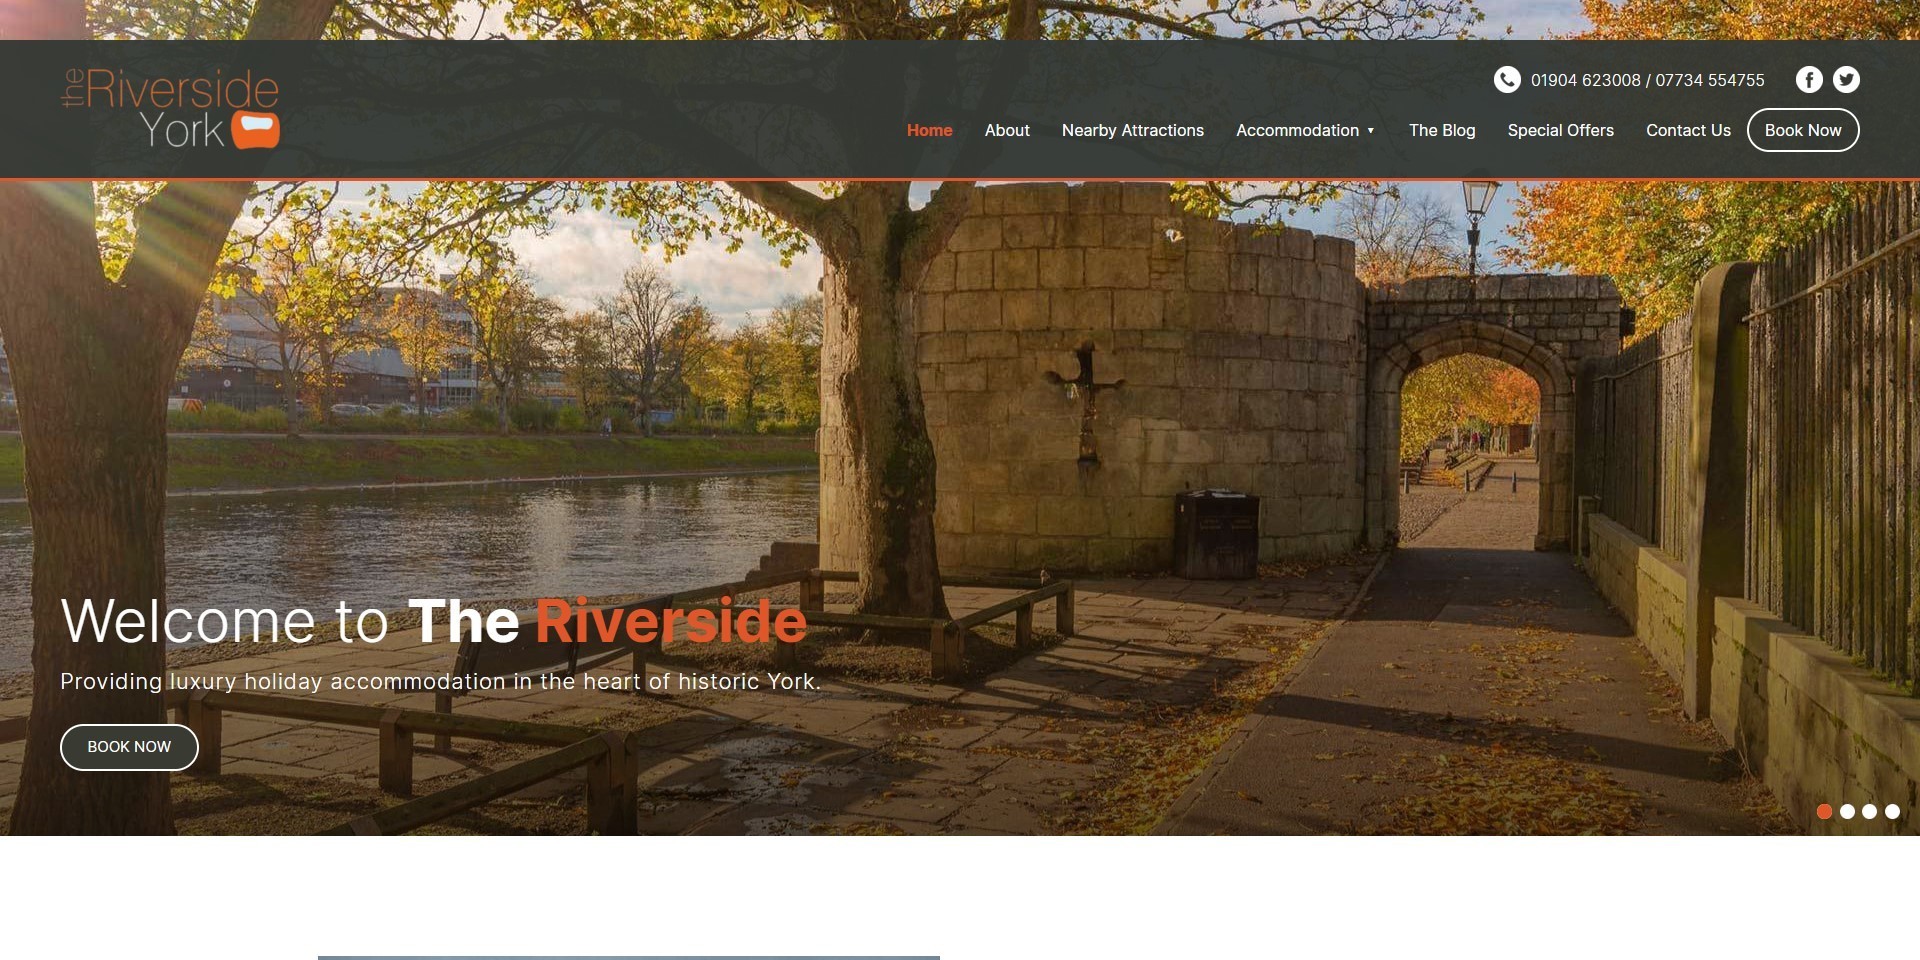 The new Riverside York, designed by it'seeze, website shown on desktop